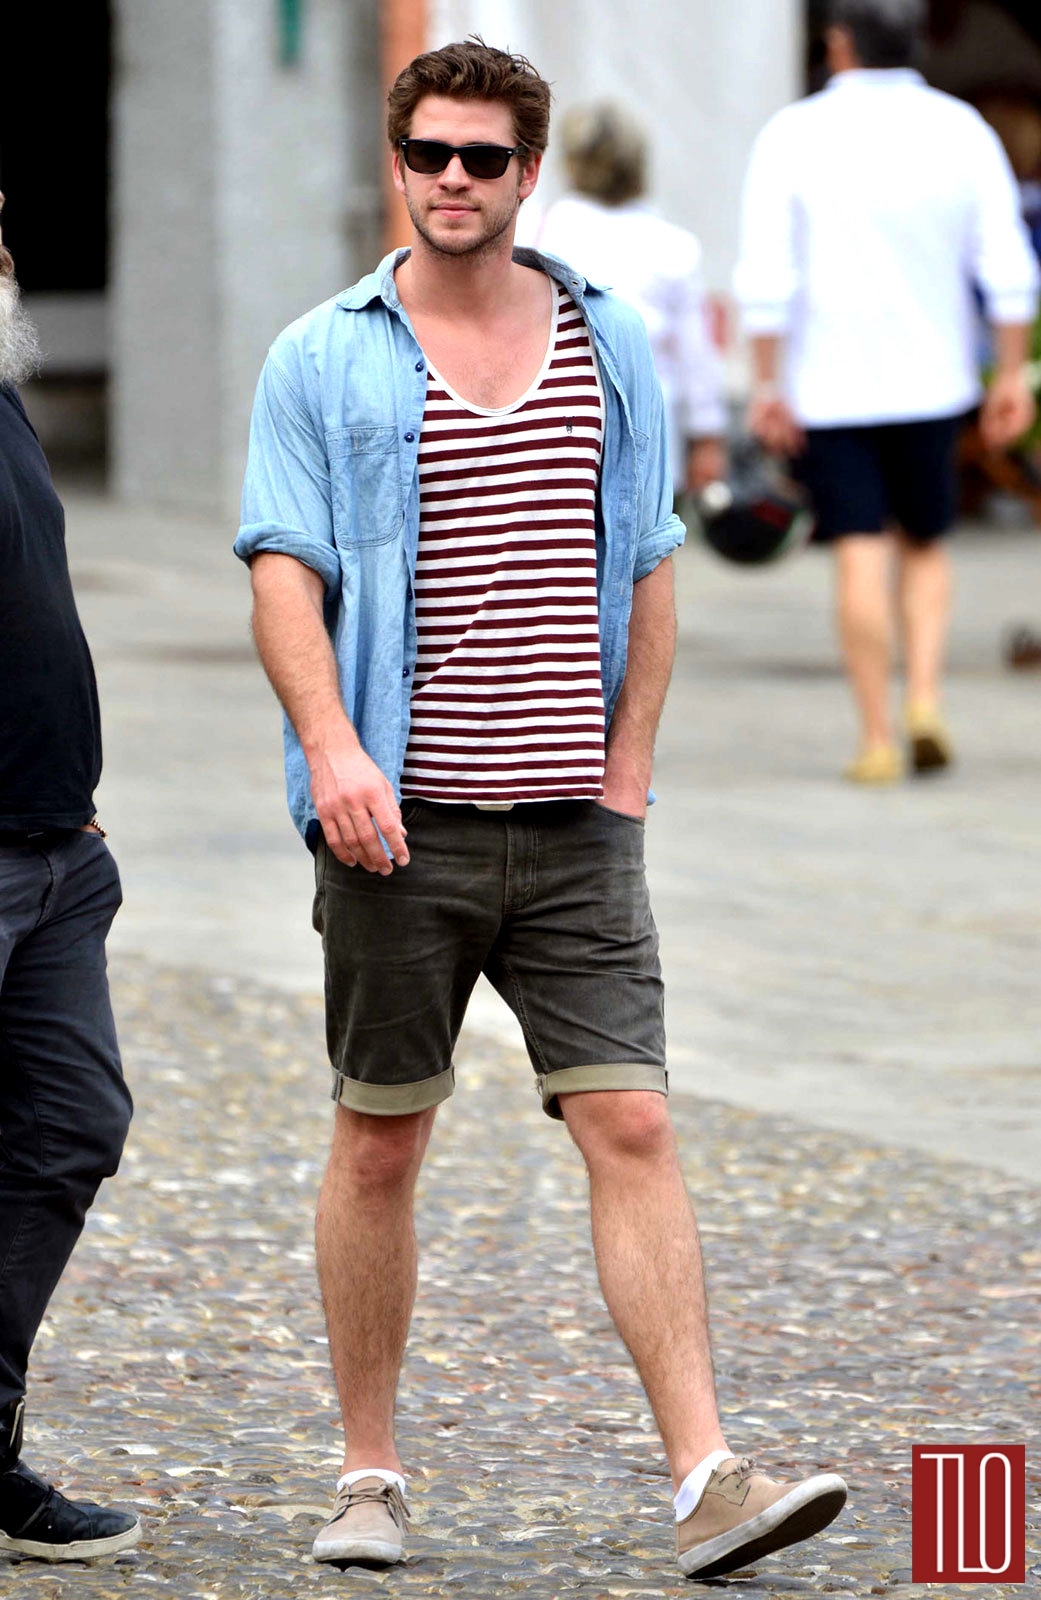 Liam-Hemsworth-Portofino-Italy-GOTS-Tom-Lorenzo-Site-TLO (1)